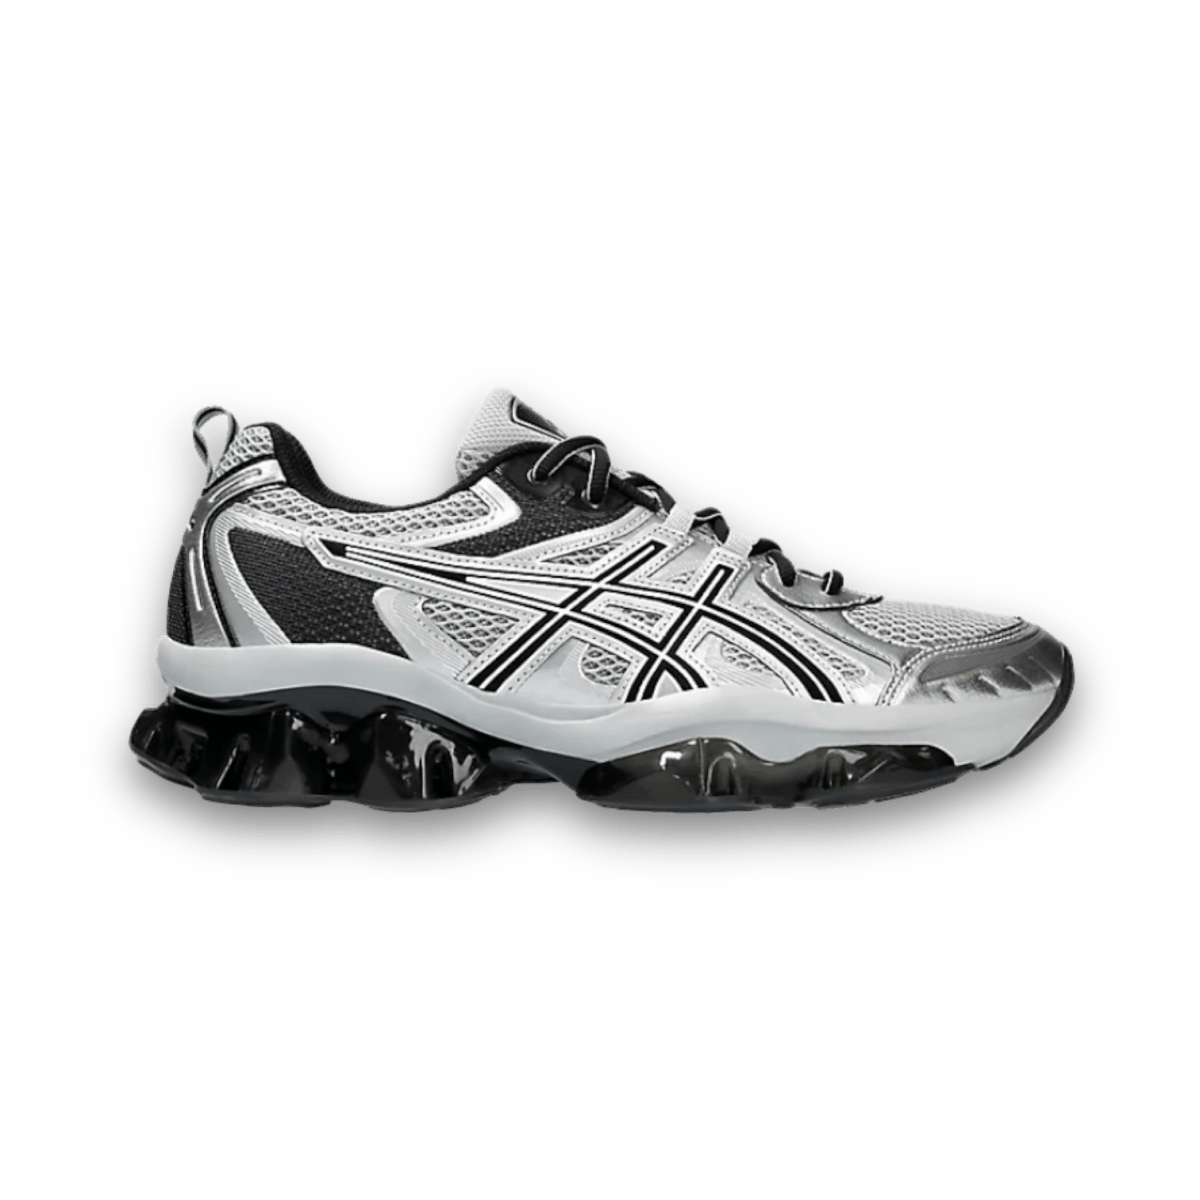 Asics Quantum Kinetic - Grey & Pure Silver - Low Sneaker - Jawns on Fire Sneakers & Streetwear